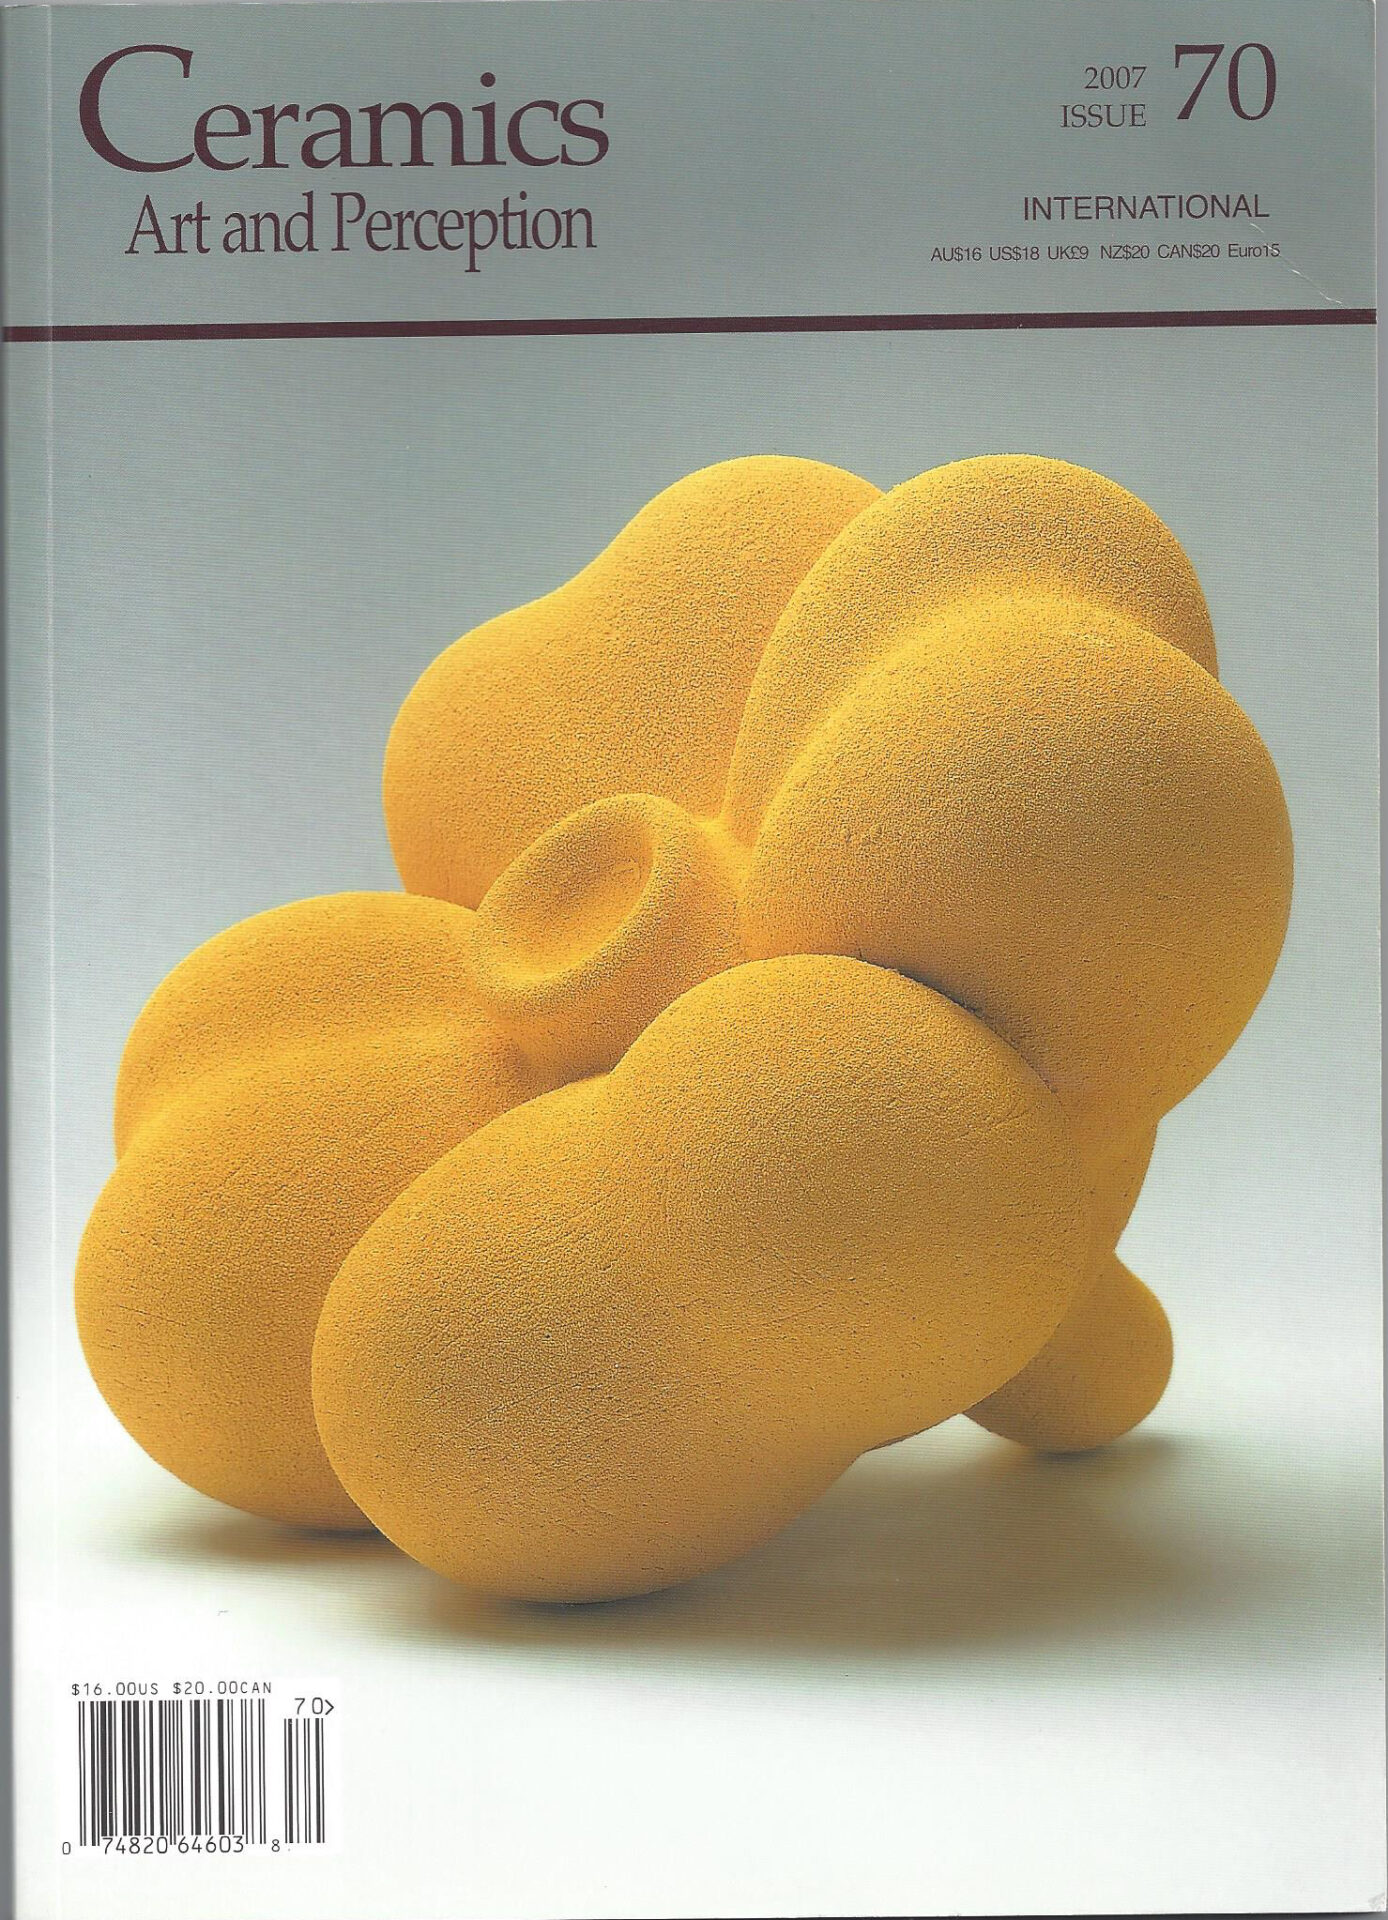 Ceramics Art and Perception (Australie) n° 70 - 2007_1_couverture